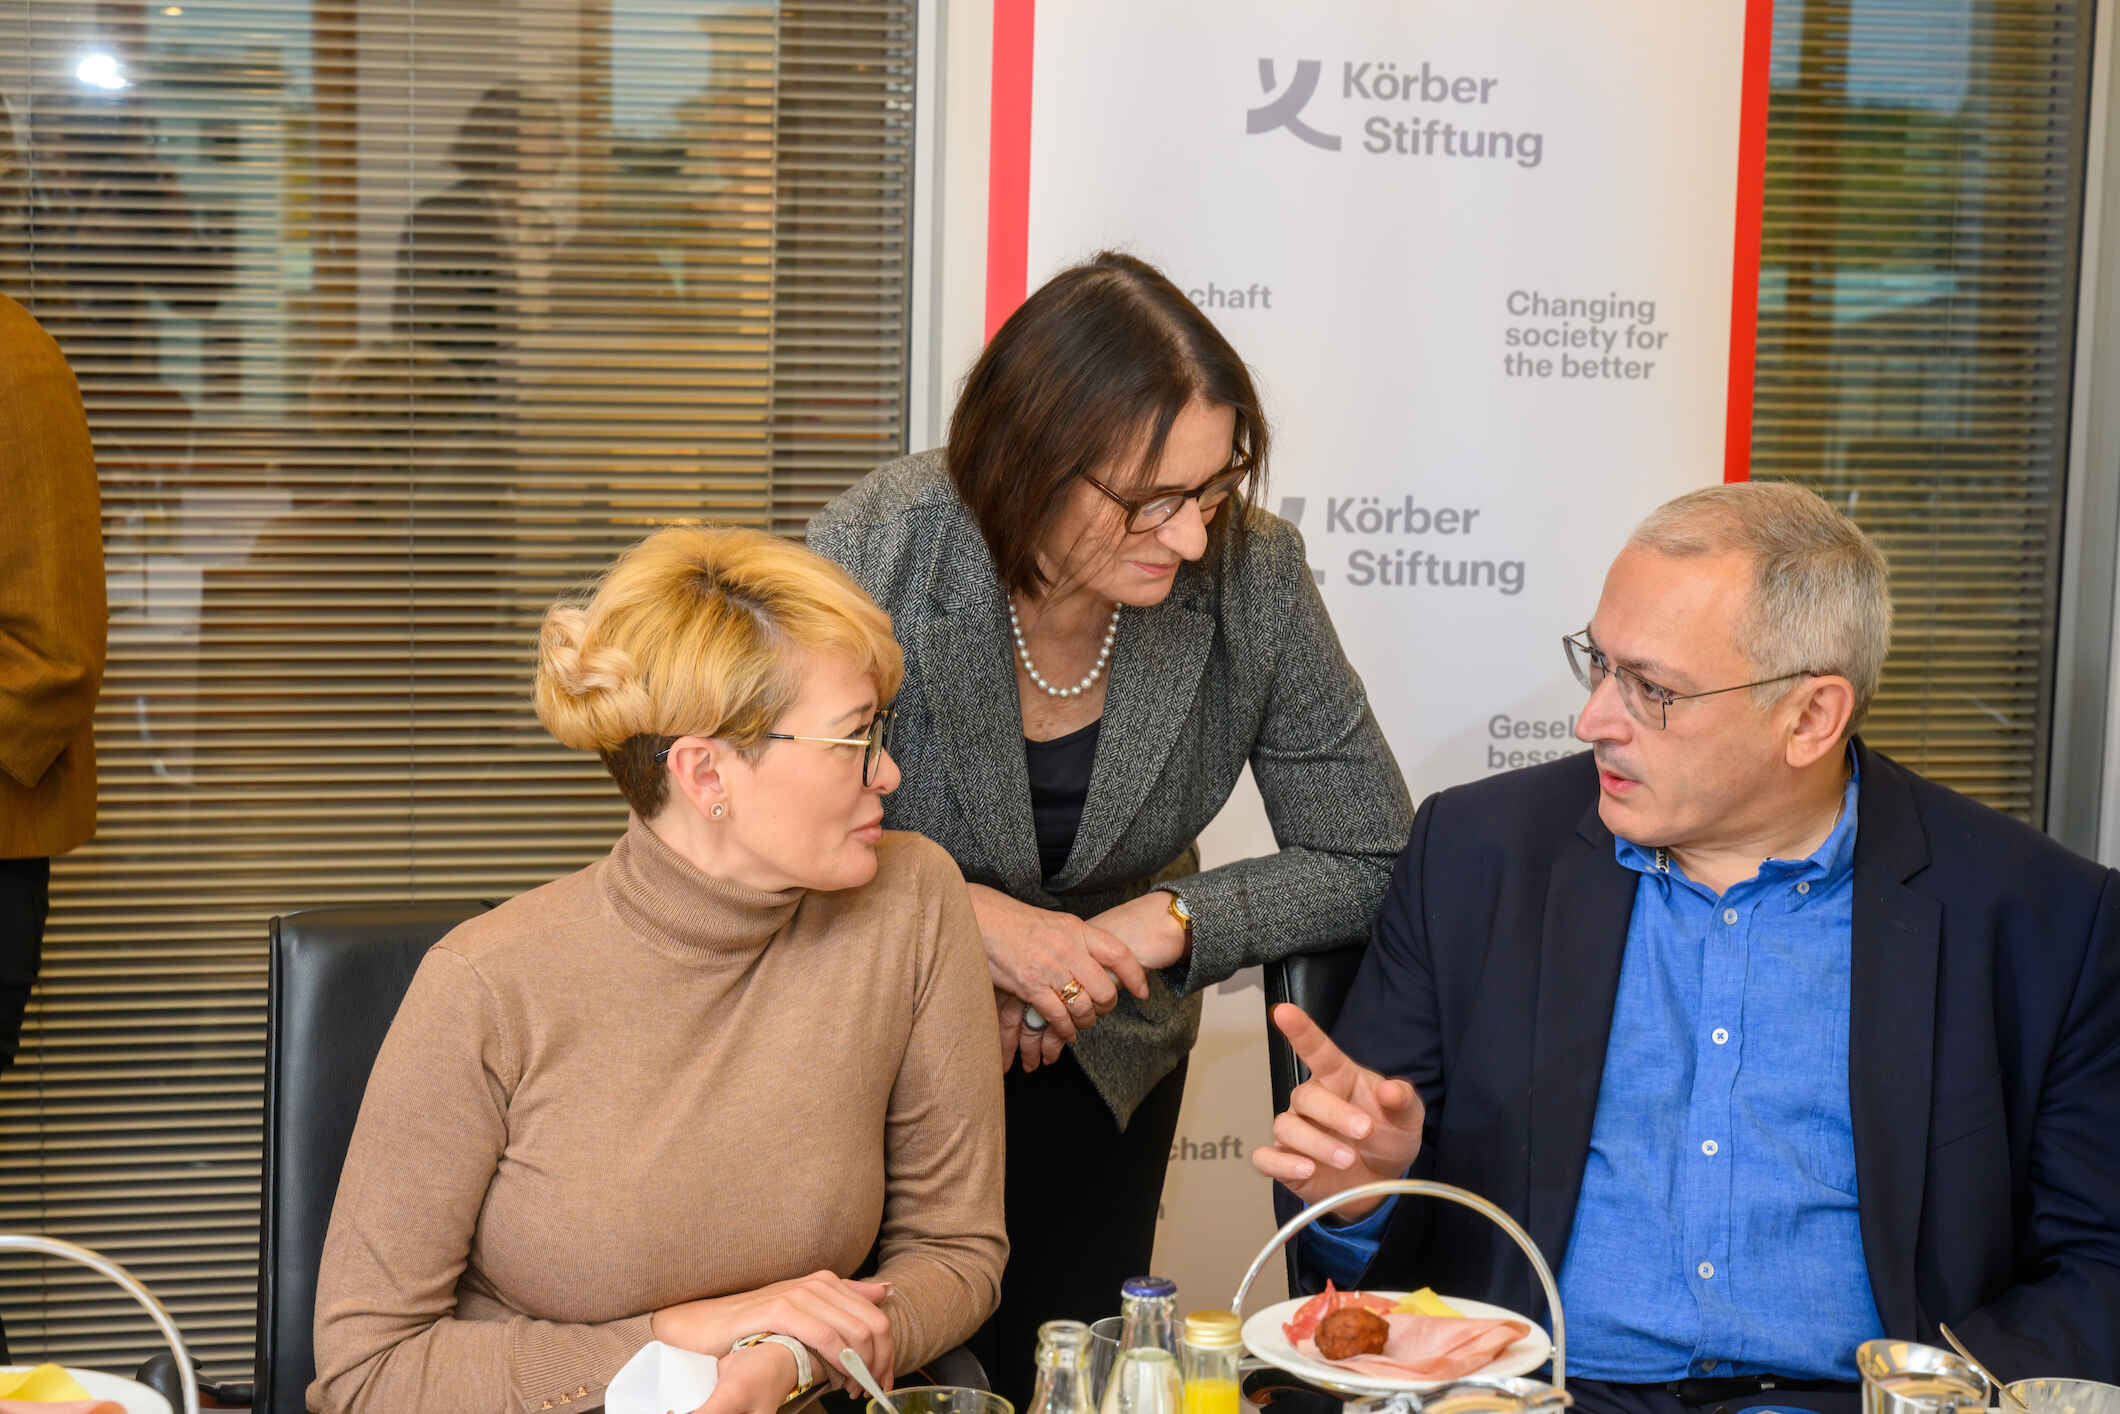 Anastasia Shevchenko, Irina Sherbakova, Mikhail Khodorkovsky